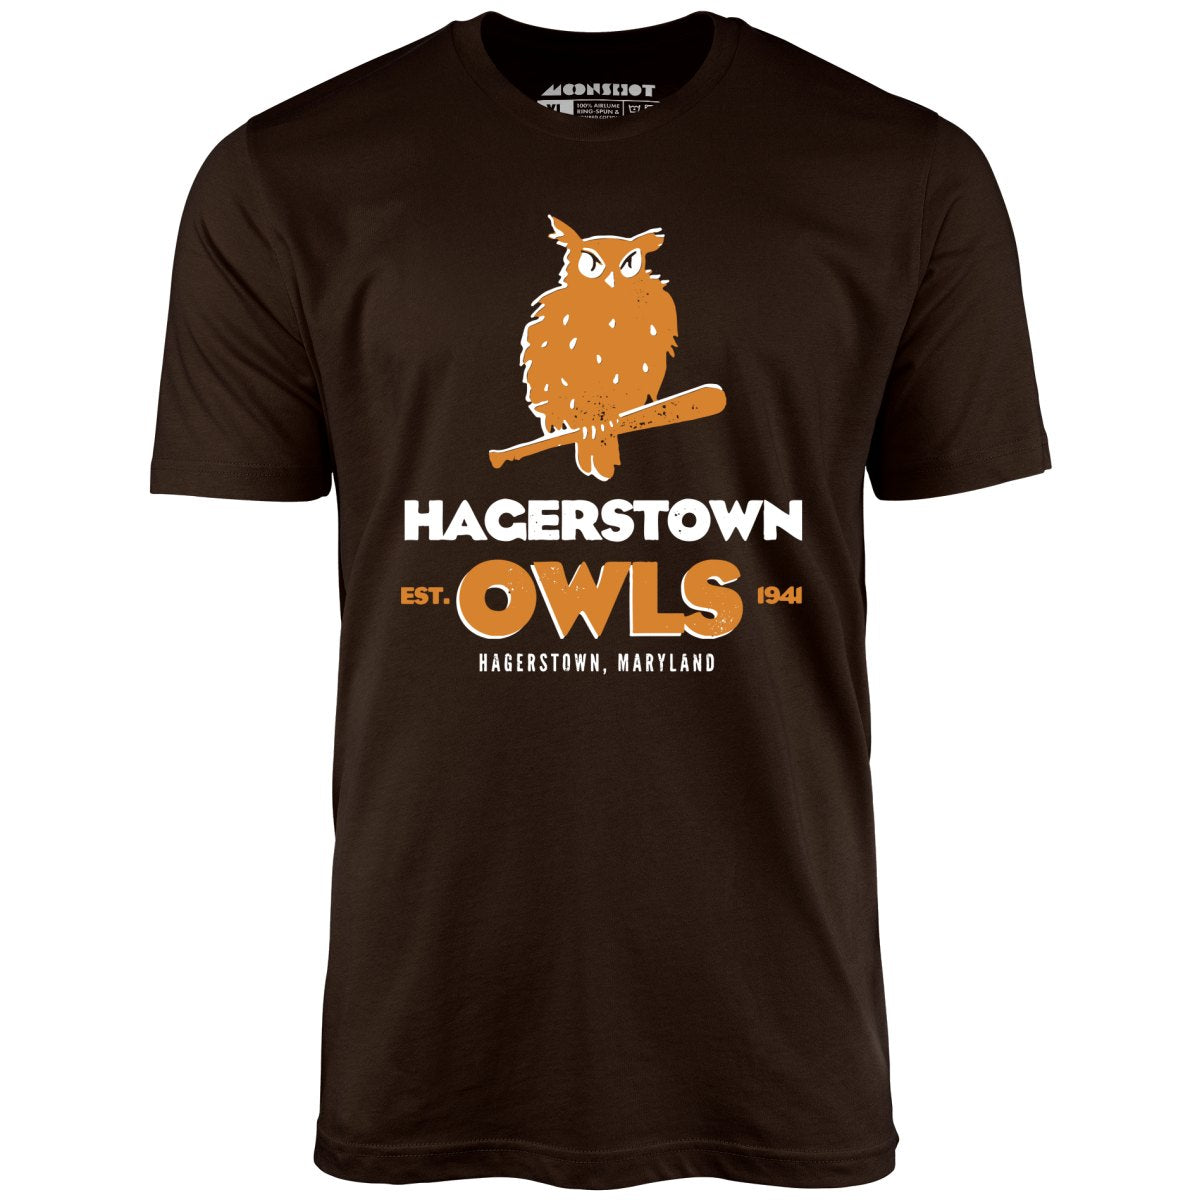 Hagerstown Owls - Maryland - Vintage Defunct Baseball Teams - Unisex T-Shirt